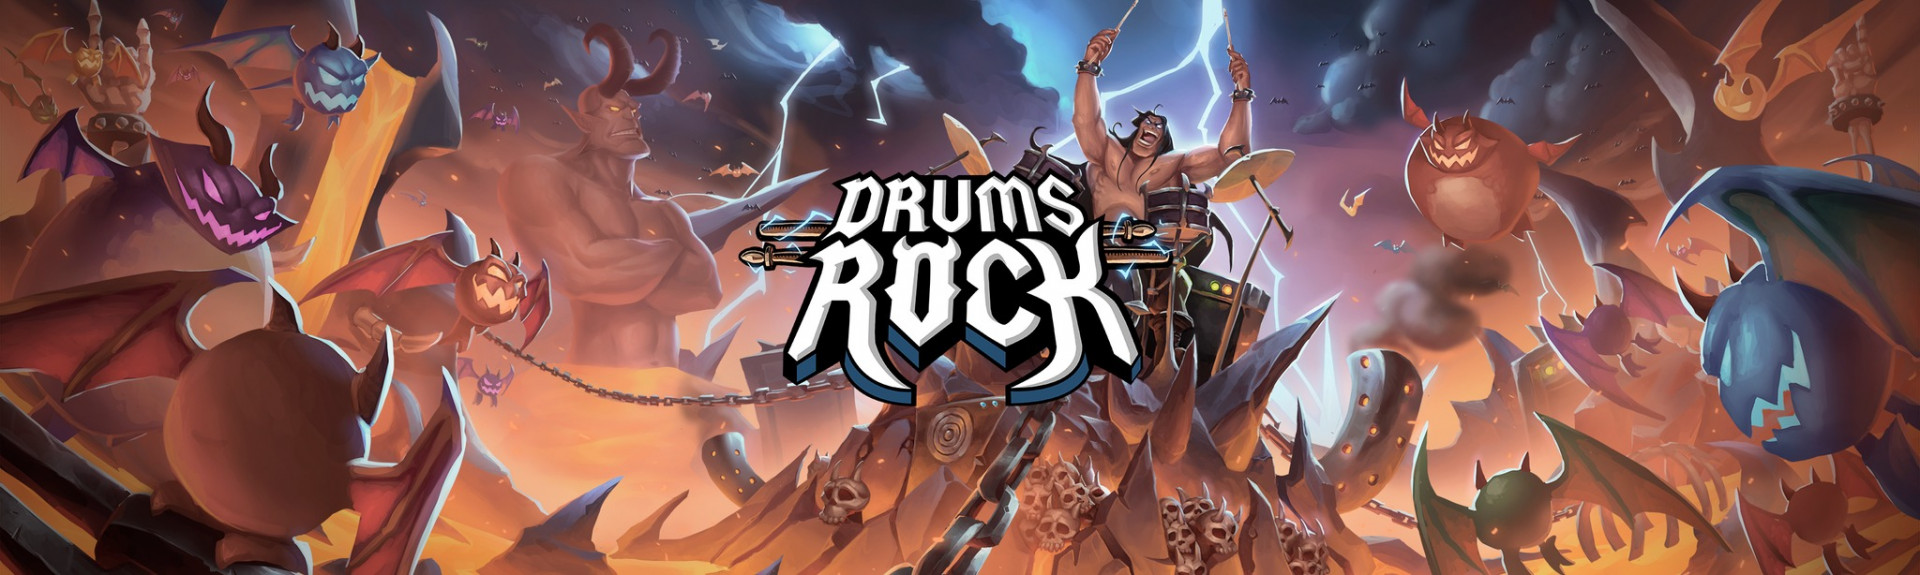 Drums Rock se suma al catálogo de PlayStation VR2